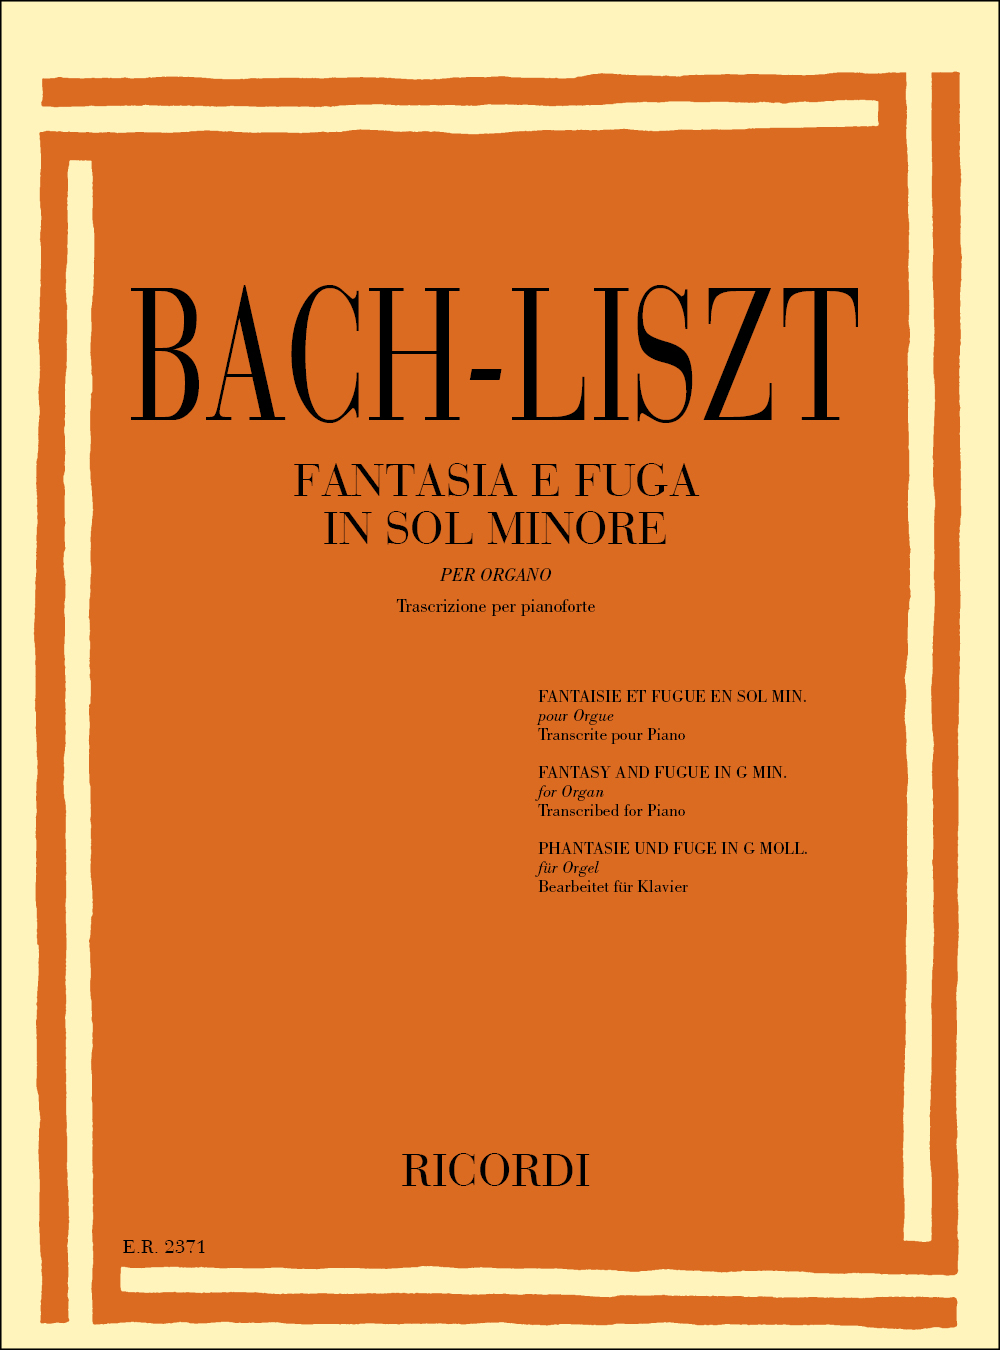 Johann Sebastian Bach: Fantasie E Fughe Per Organo: Bwv 542 In Sol Min.: Piano